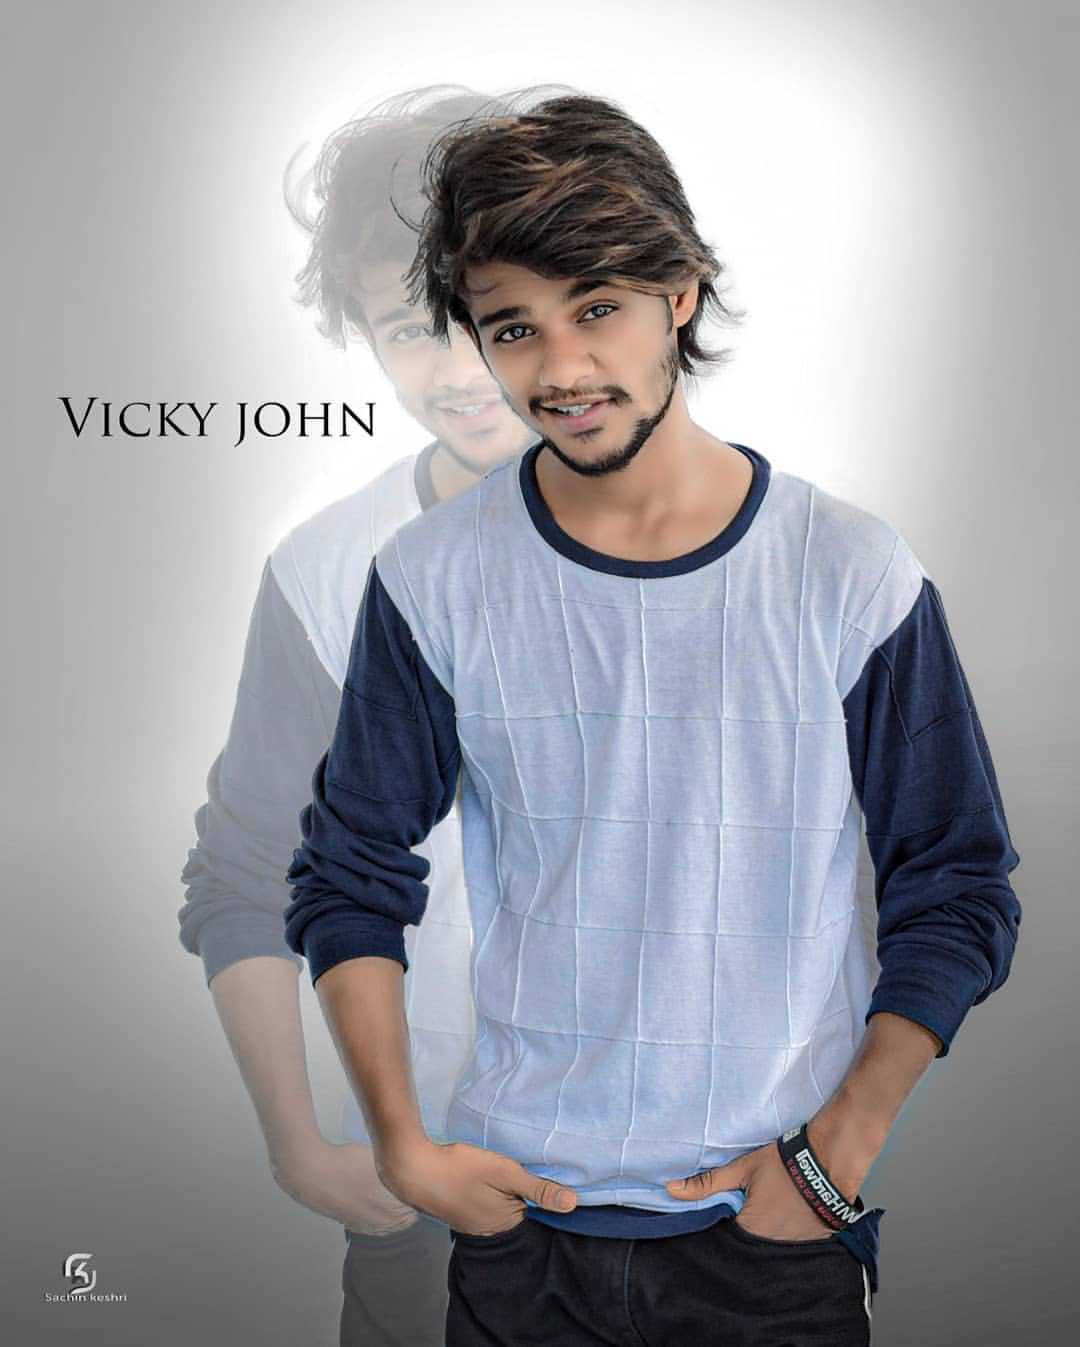 Vicky John Ki Biography